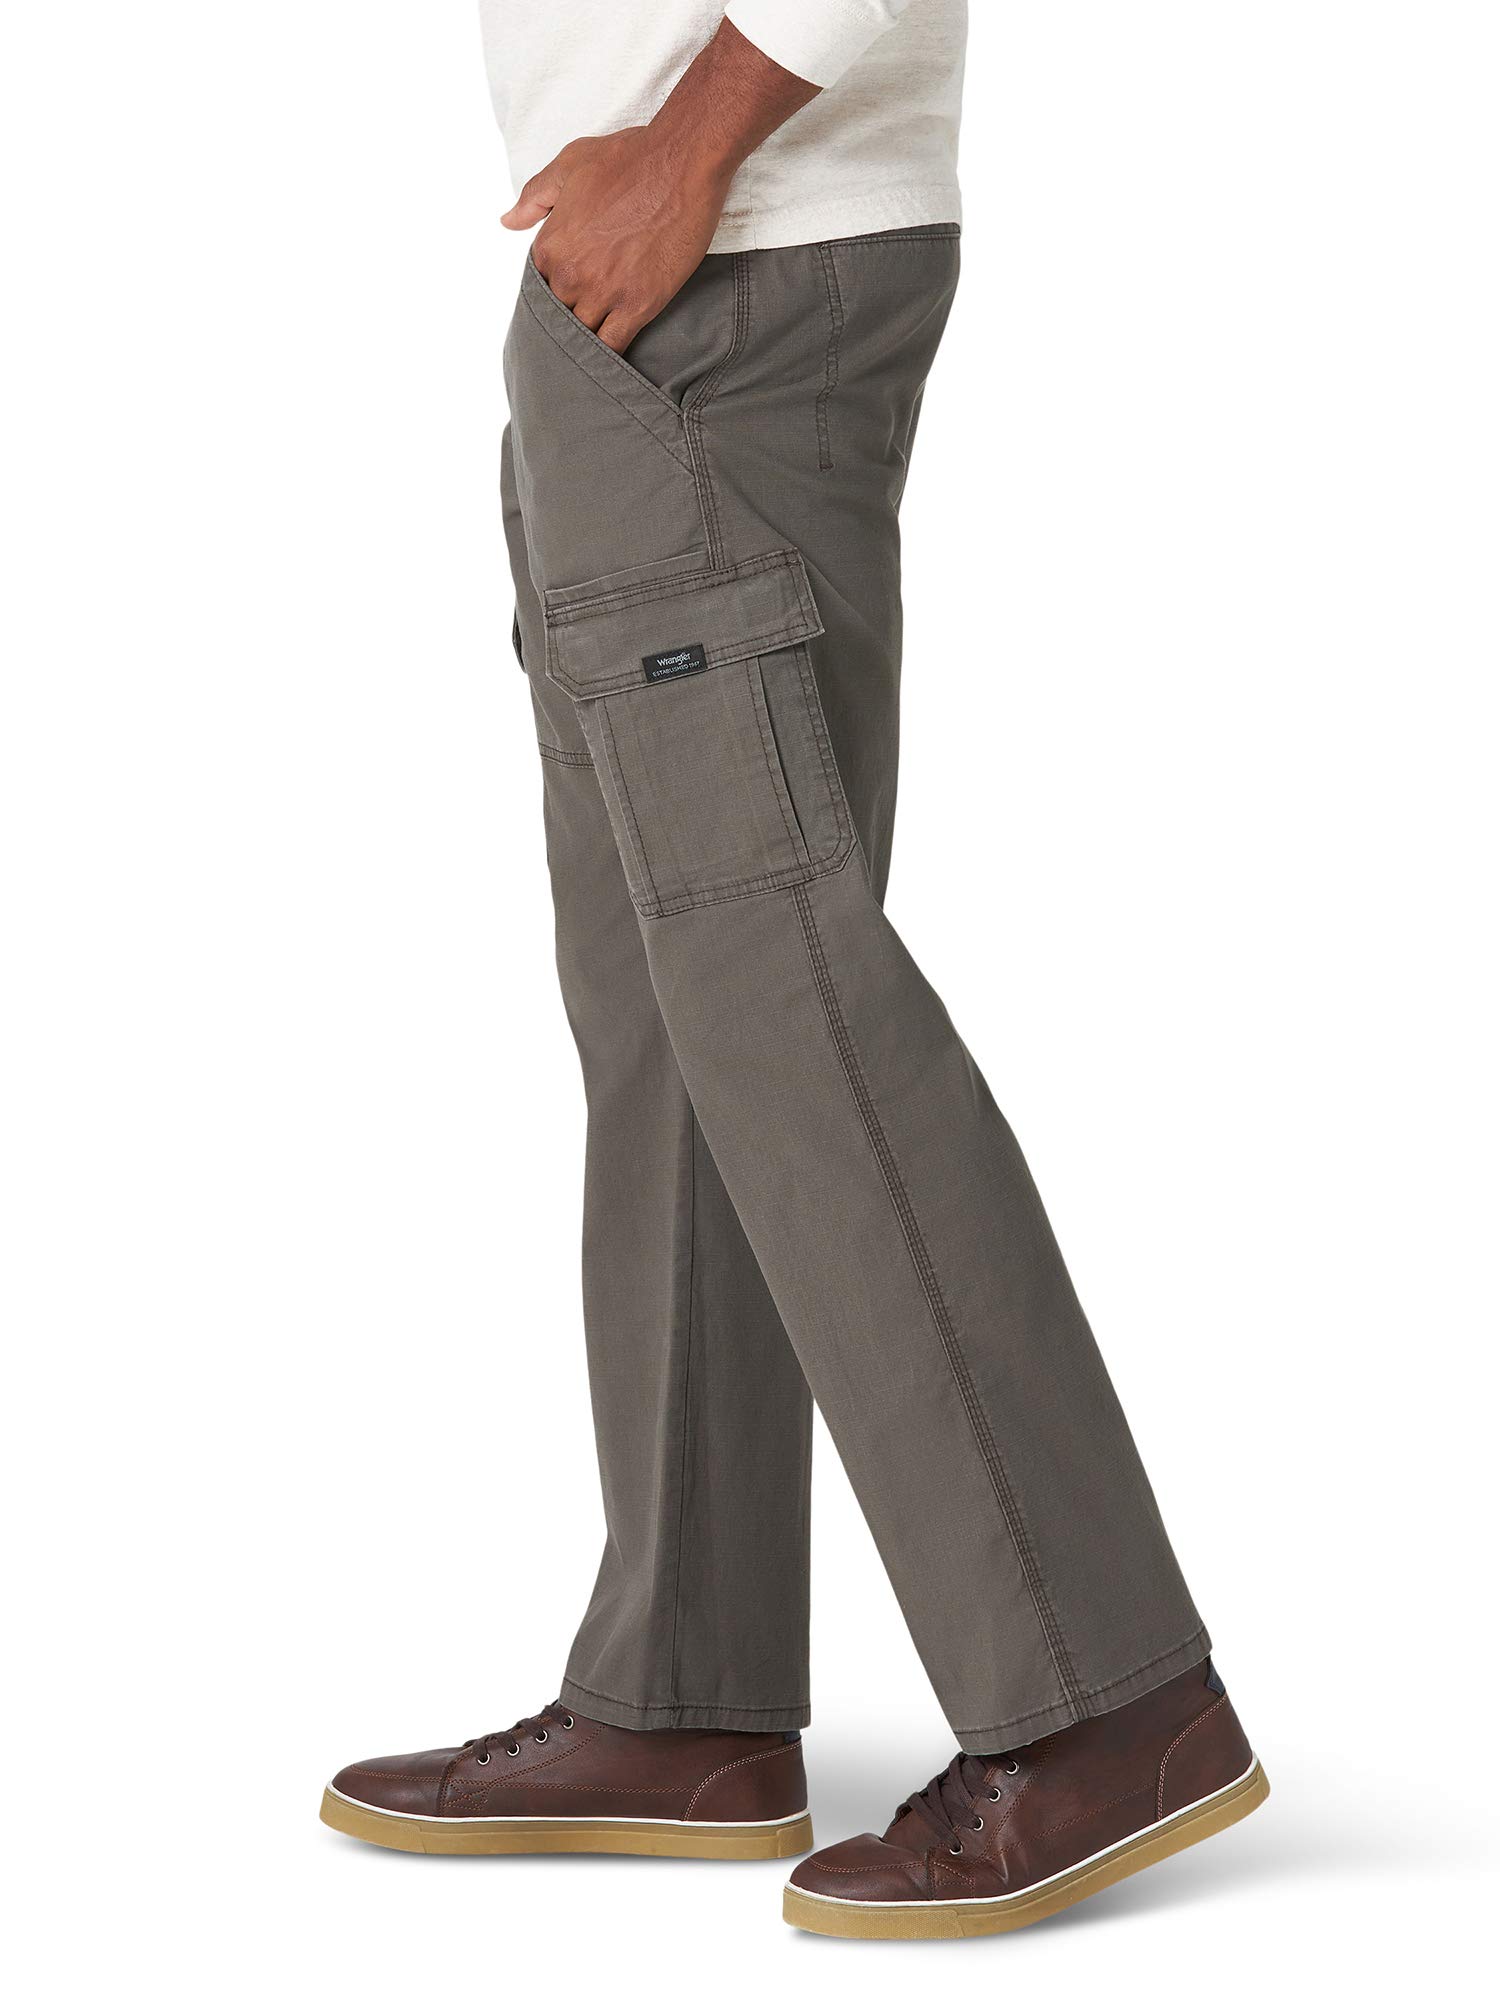 NWT MEN Wrangler Cargo Straight Fit Pant Nylon Flex Performance Flex Waist  Green | eBay